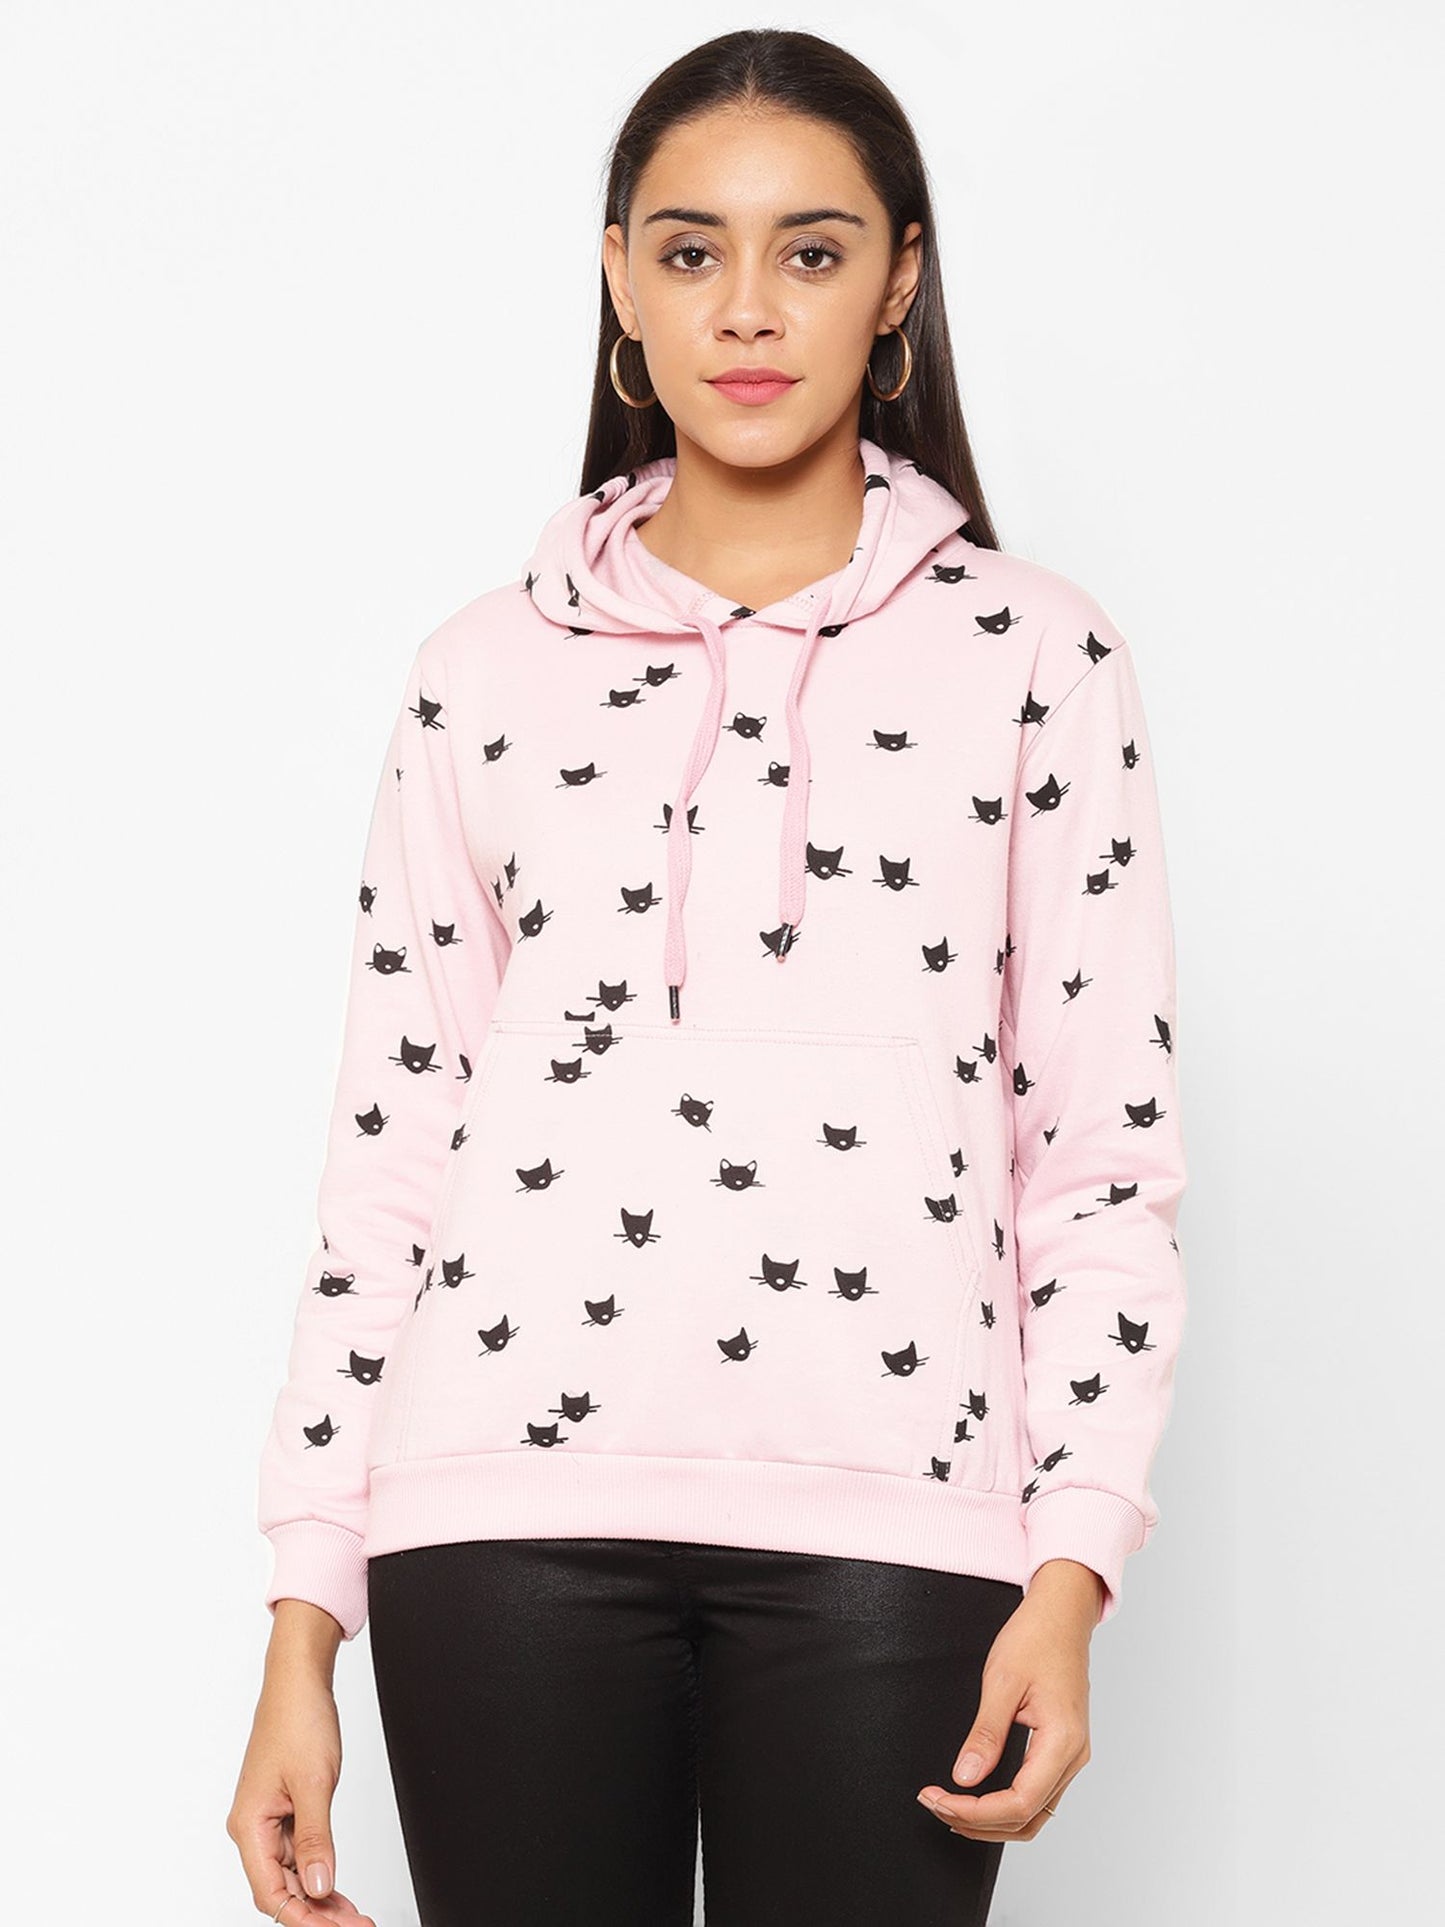 Popster Baby Pink Printed Cotton Hoody Regular Fit Long Sleeve Womens Sweatshirt